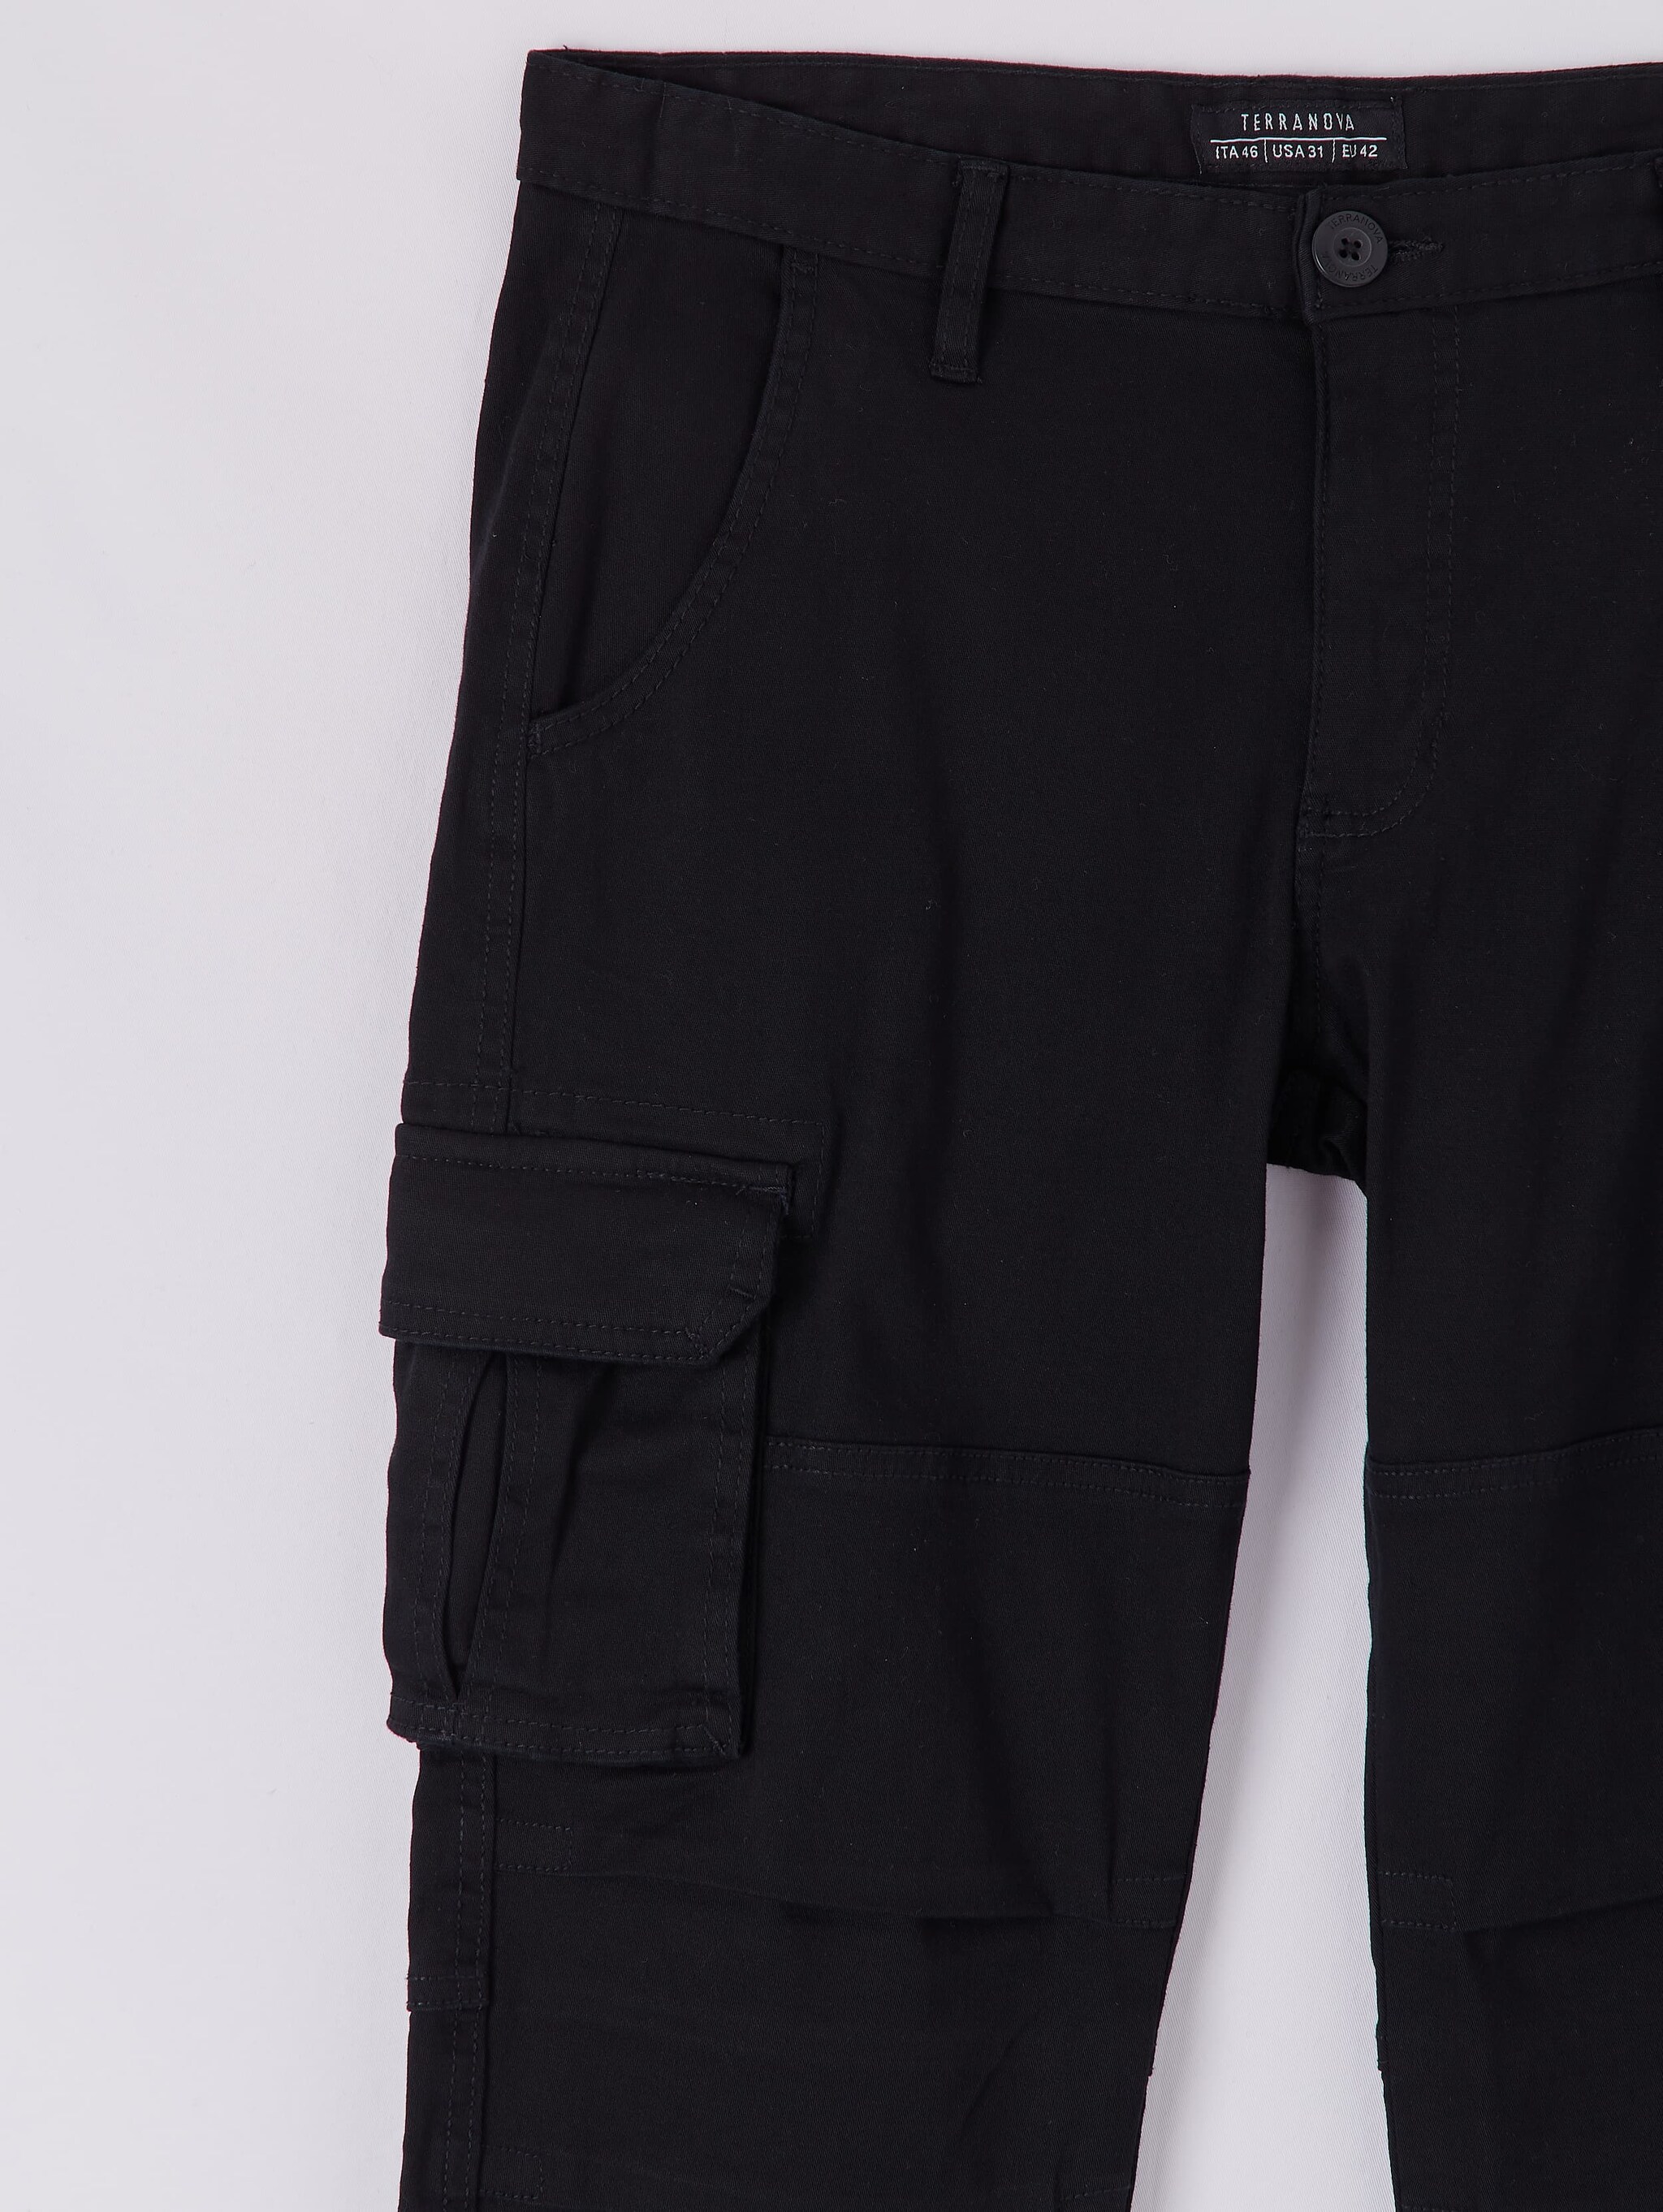 all black cargo pants